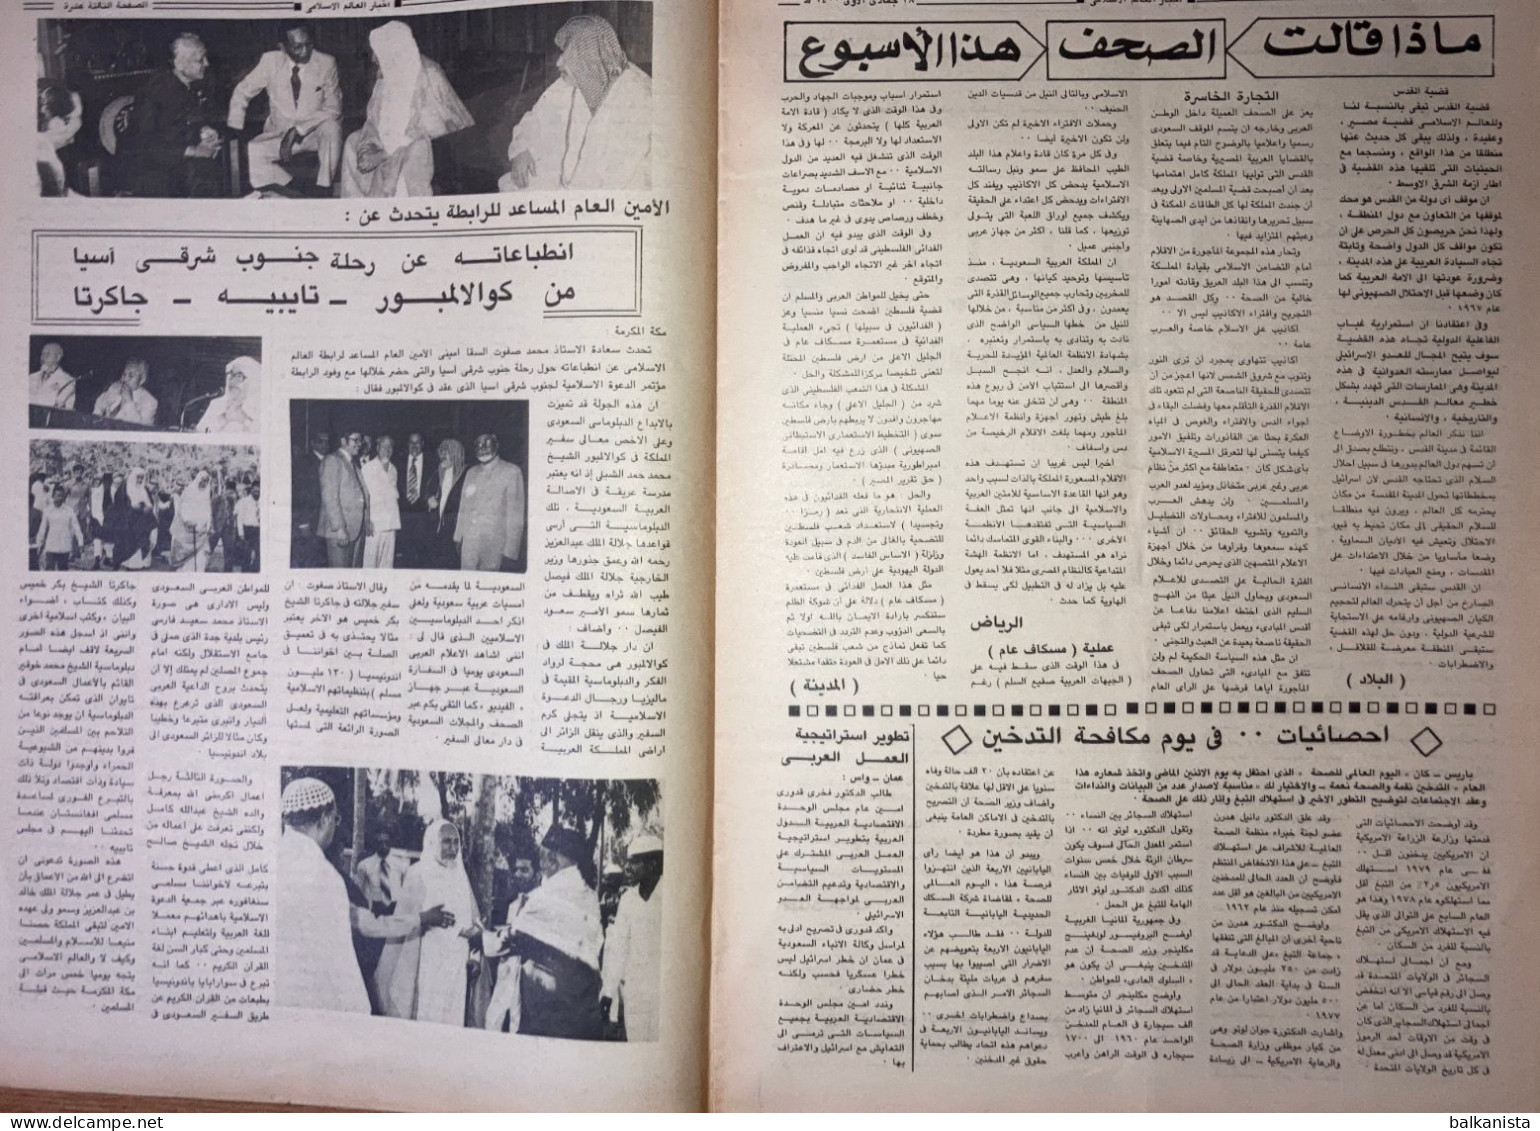 Saudi Arabia Akhbar al-Alam al-Islami Newspaper 14 April 1980